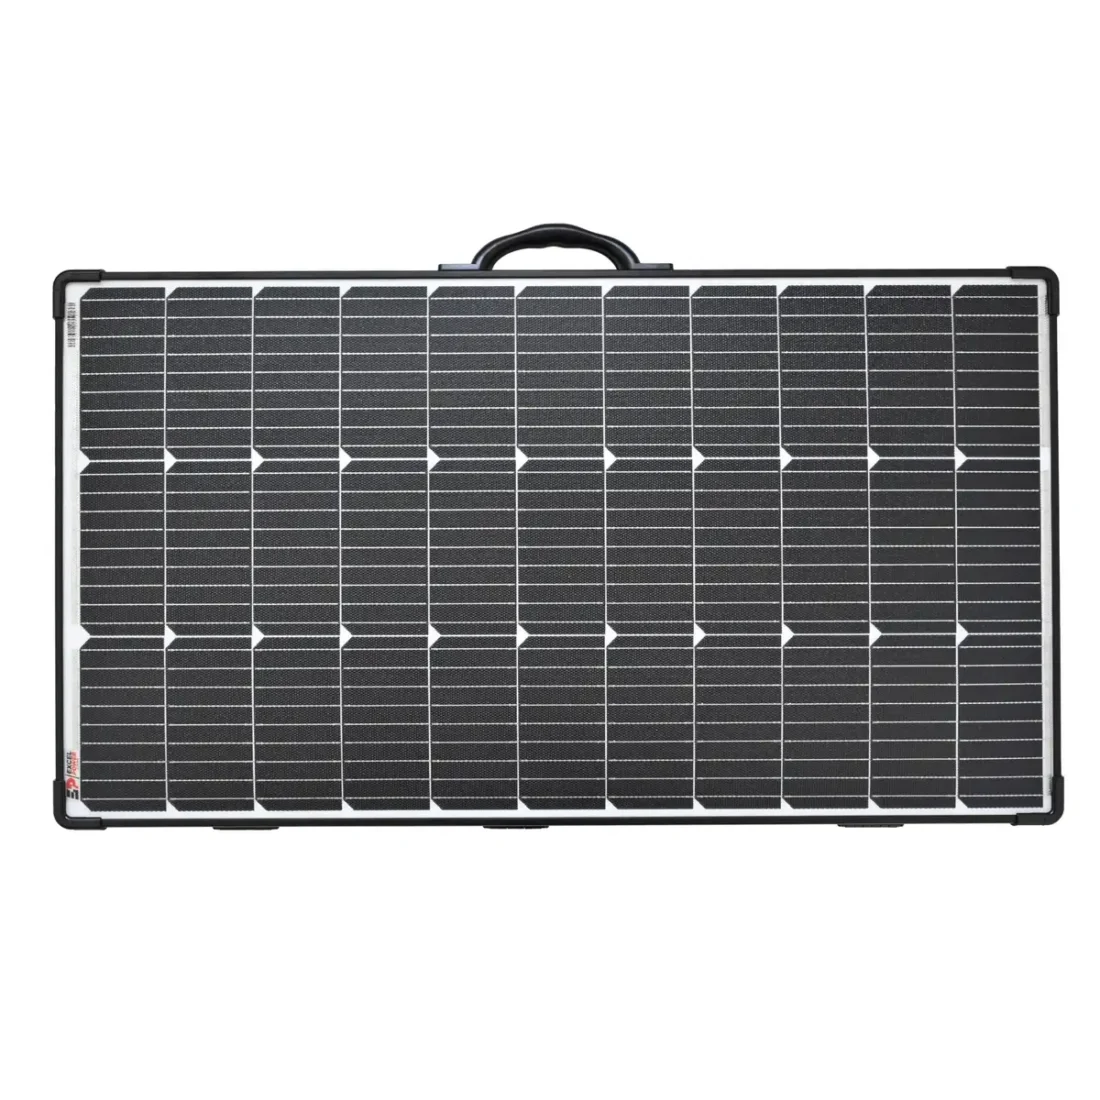 Excel Power 200W Portable Folding Solar Panel